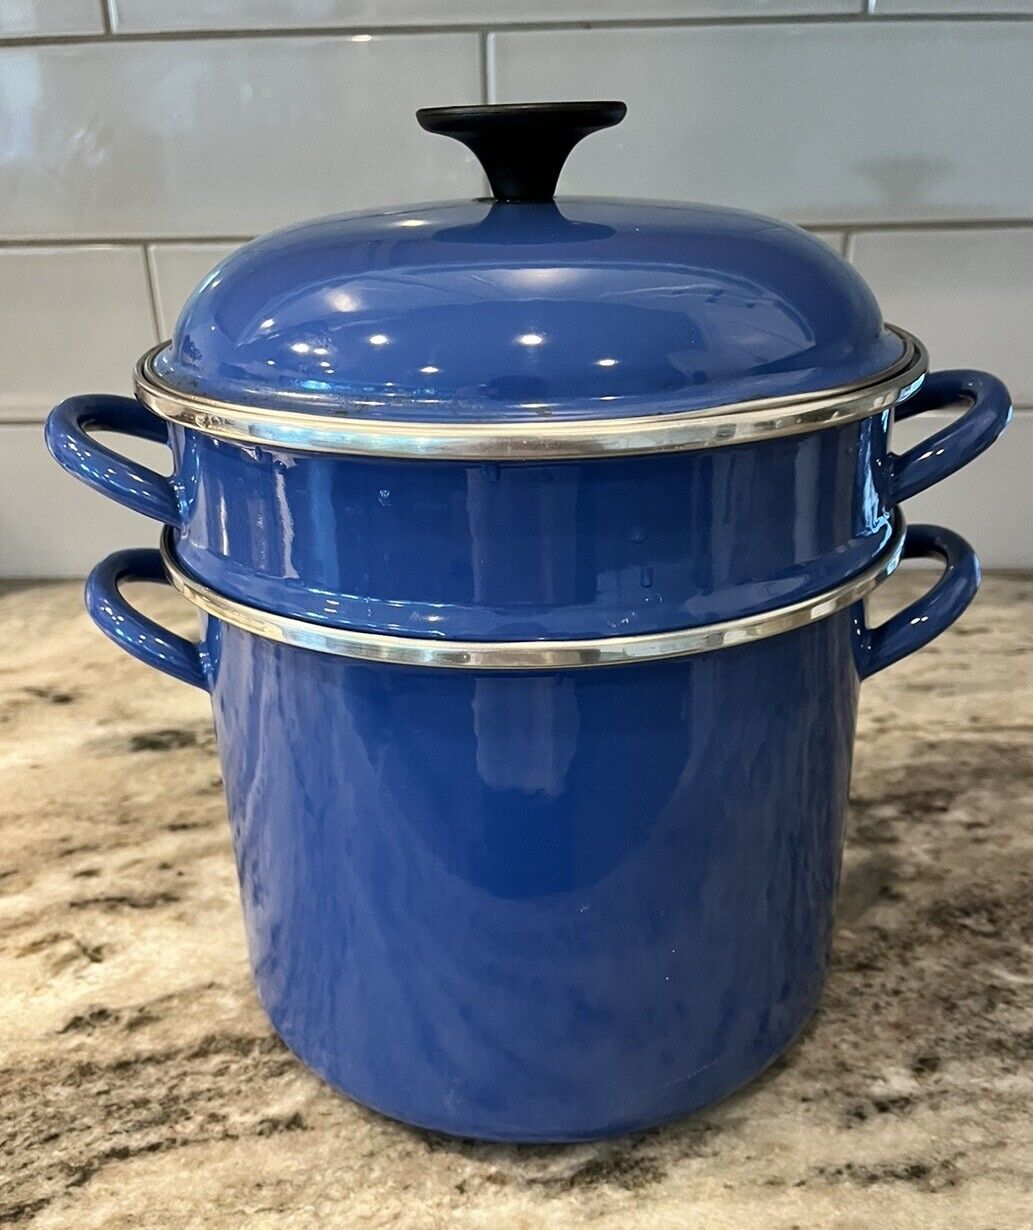 Vintage Le Creuset Blue Enameled Steel 5 Quart Stock Pasta Pot w/ Steamer Insert